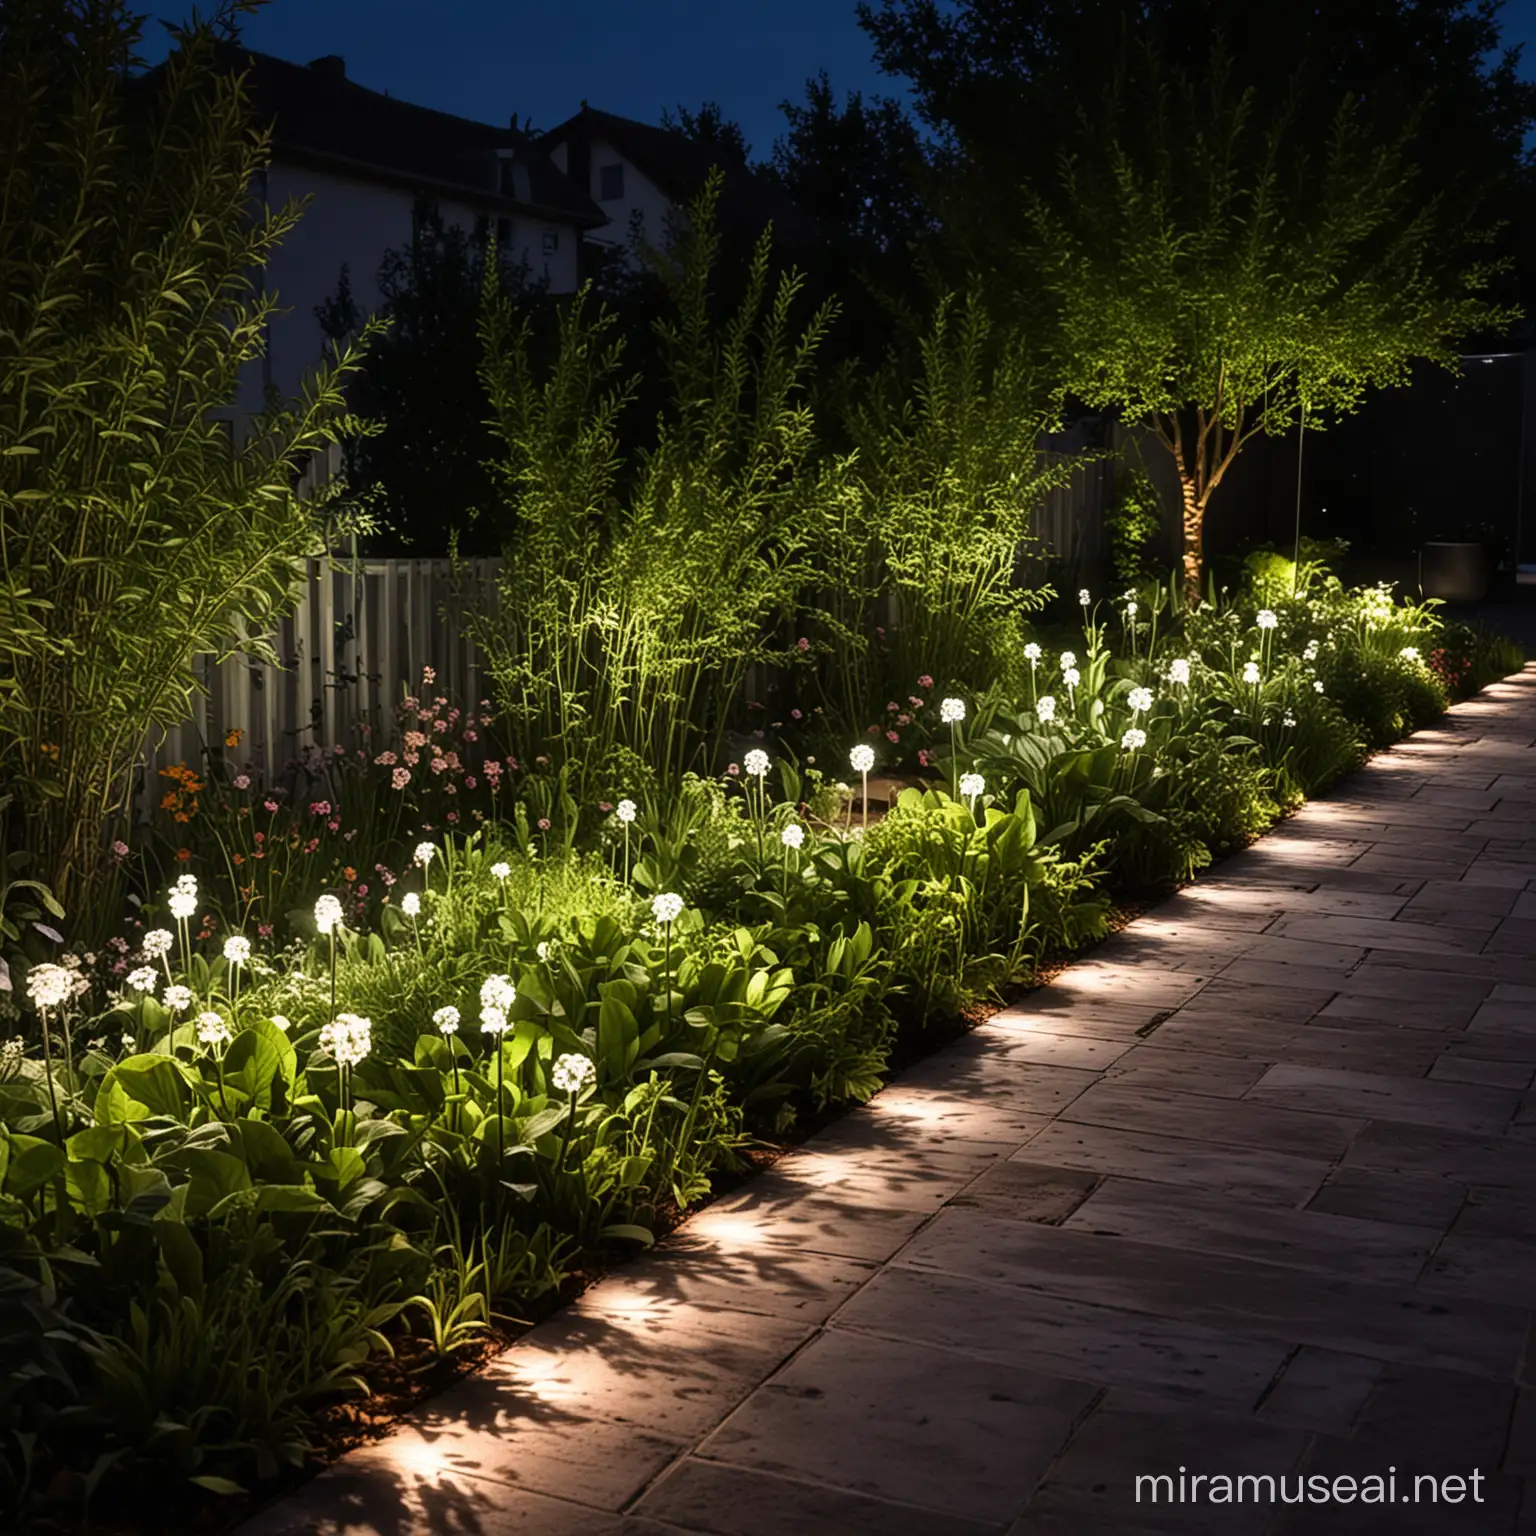 Night Garden Illuminated by LED Lights Tranquil Outdoor Scene